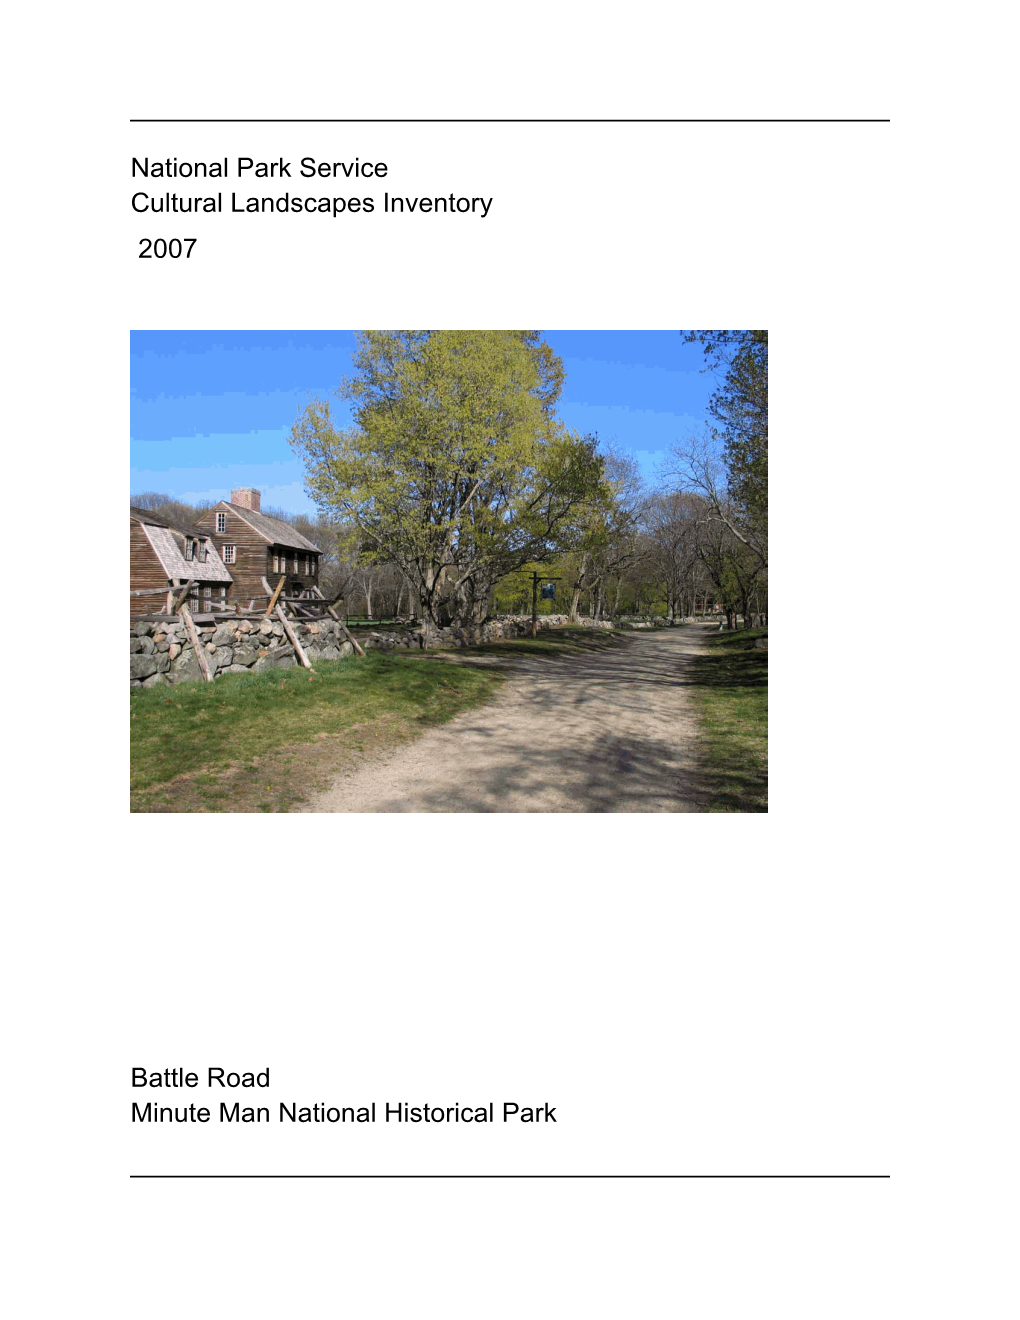 Cultural Landscapes Inventory Battle Road Minute Man National Historical Park